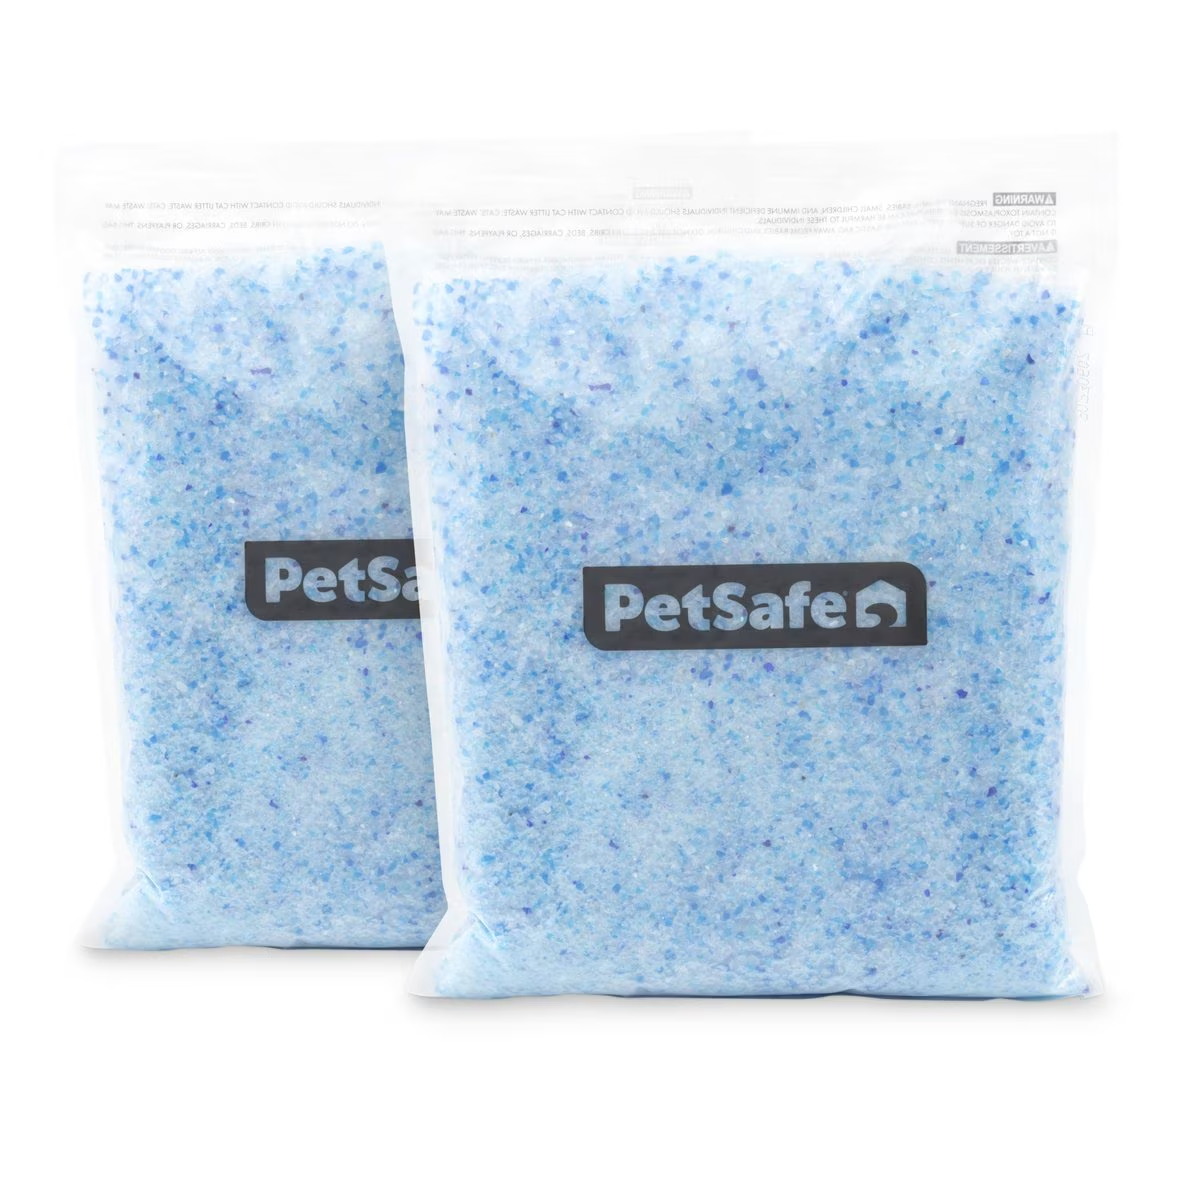 PetSafe ScoopFree Premium Crystal Litter 2-Pack New